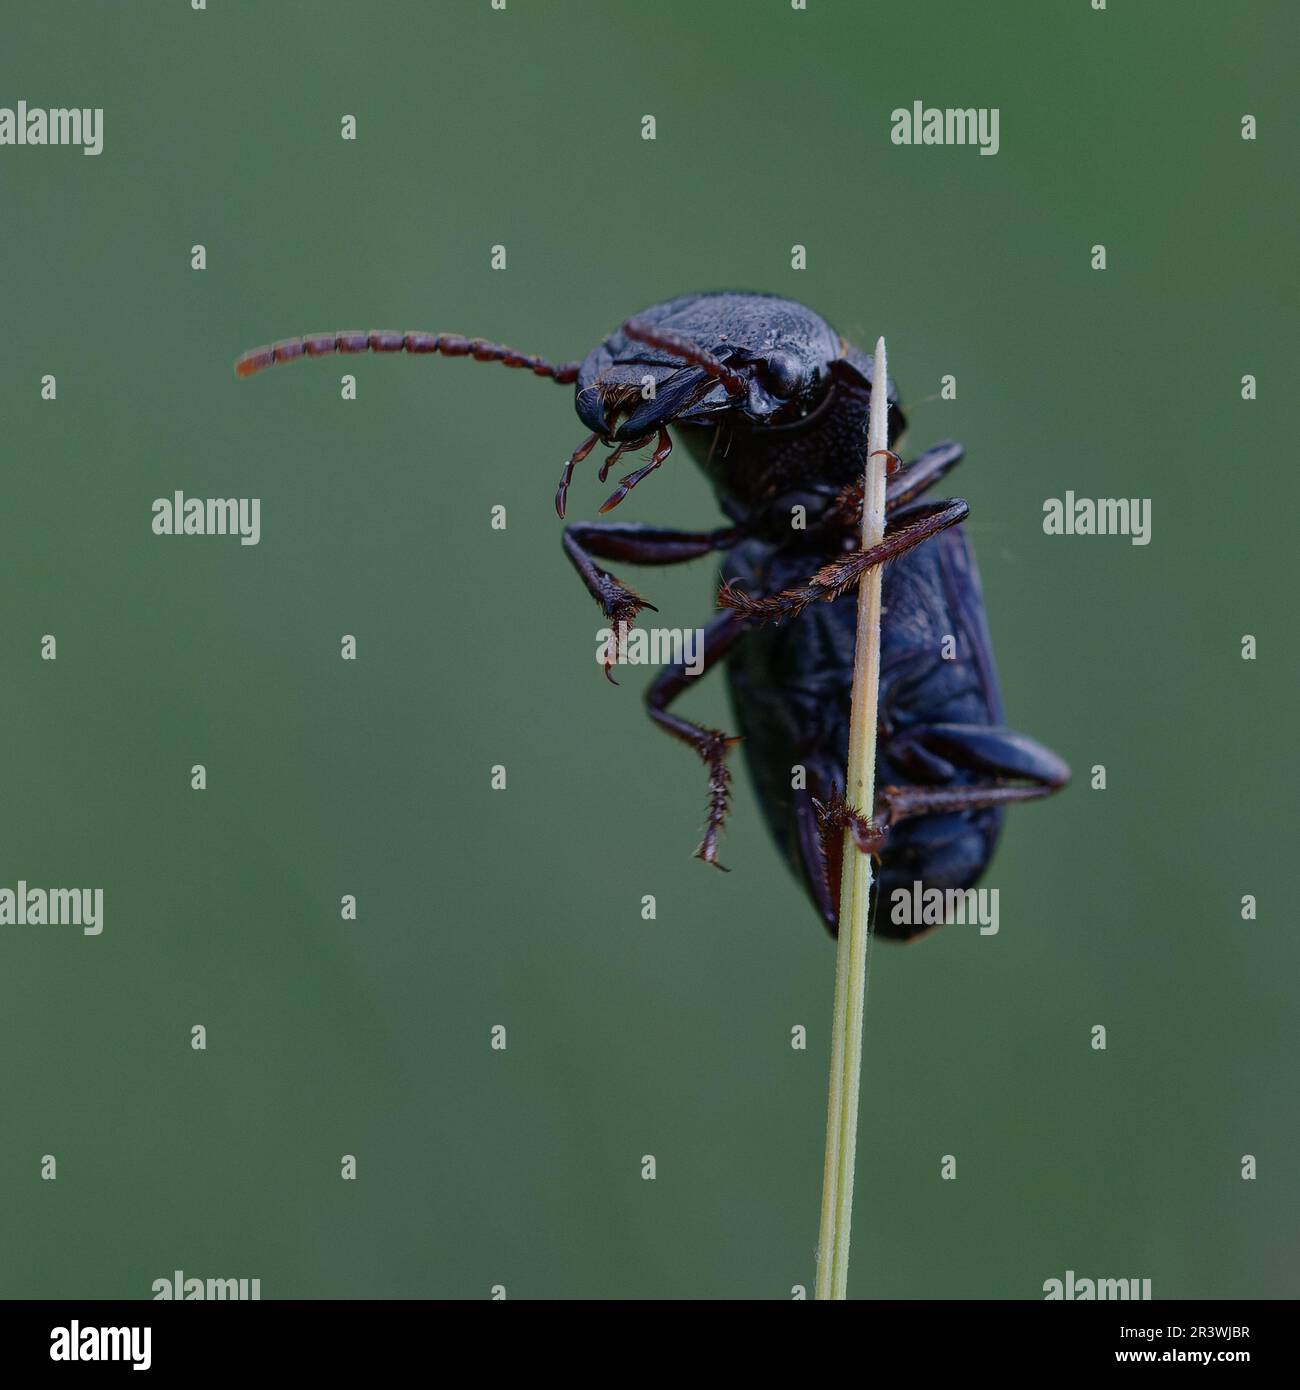 Beetle (Dixus sp.) on a plant stem Stock Photo